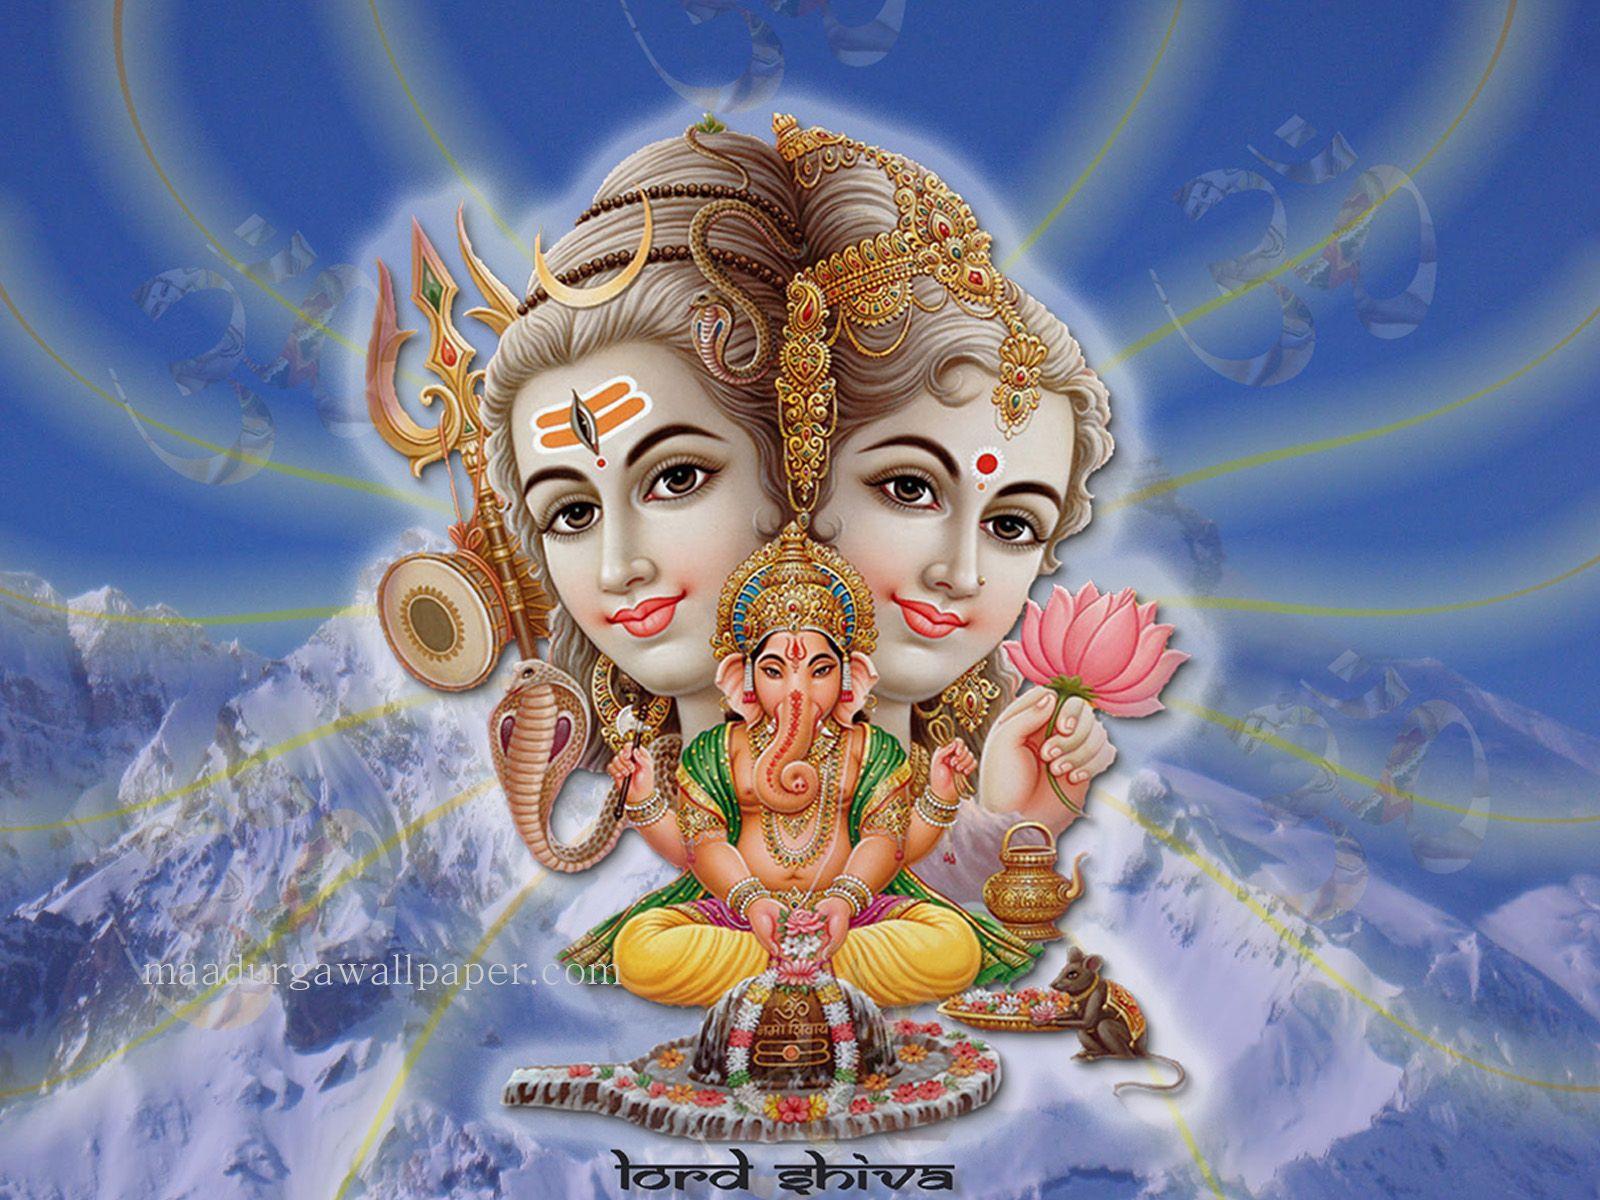 shankar bhagwan image free download